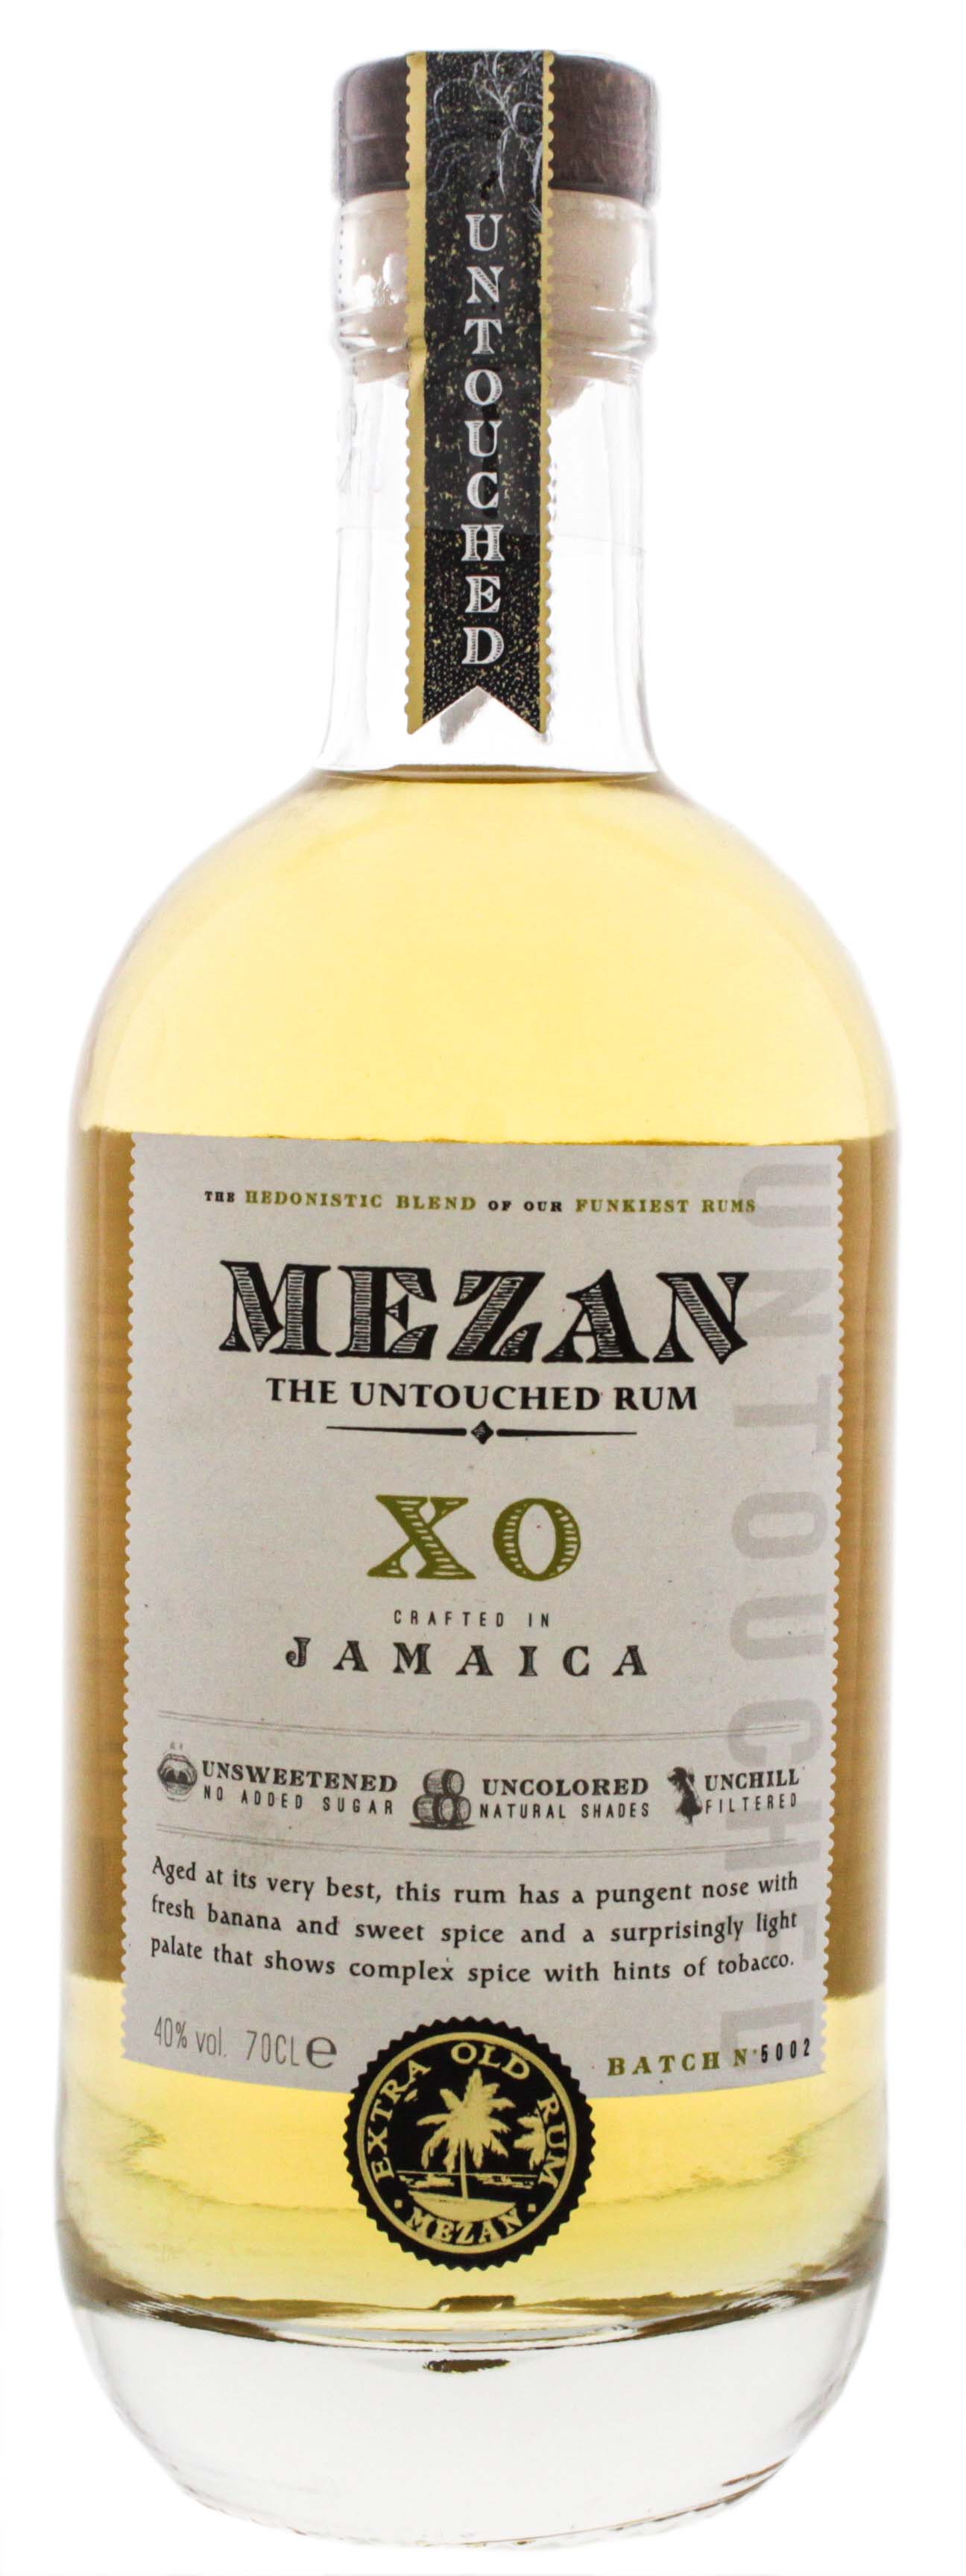 Shop XO & Barrique Spirituosen Rum Jamaican Rum kaufen! Online Mezan